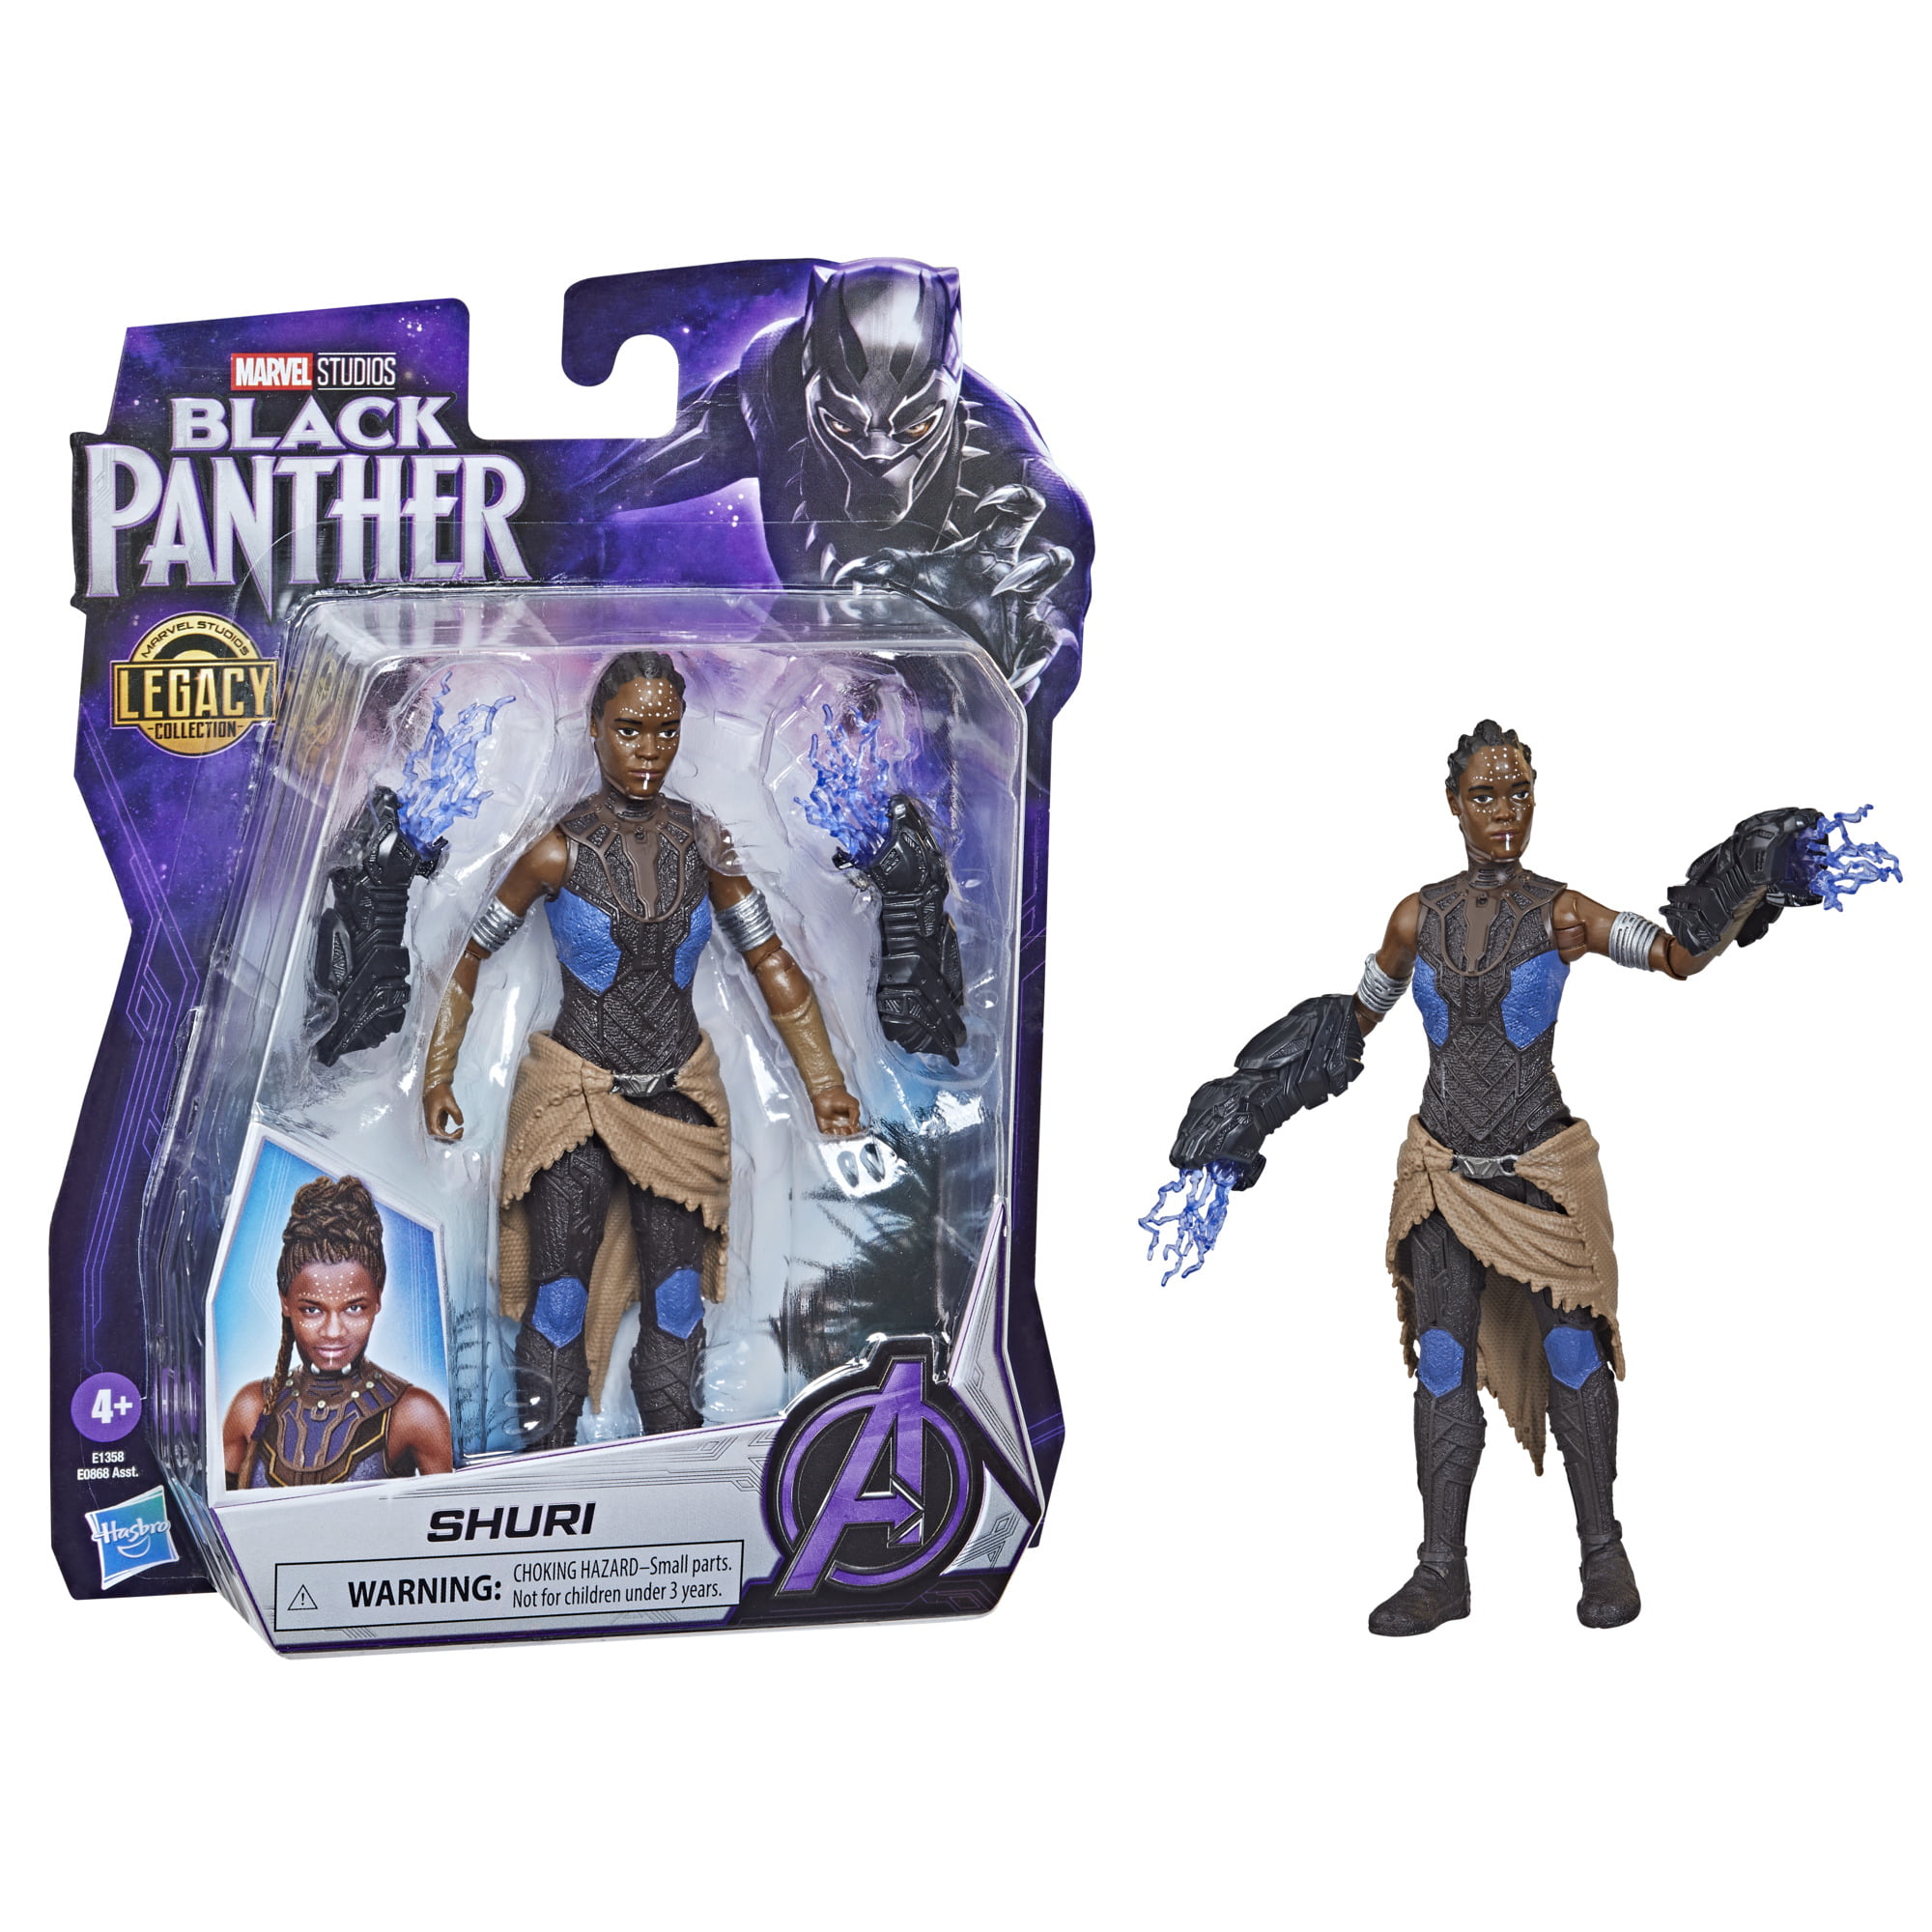 Marvel Black Panther Marvel Studios Legacy Collection Shuri Action Figure